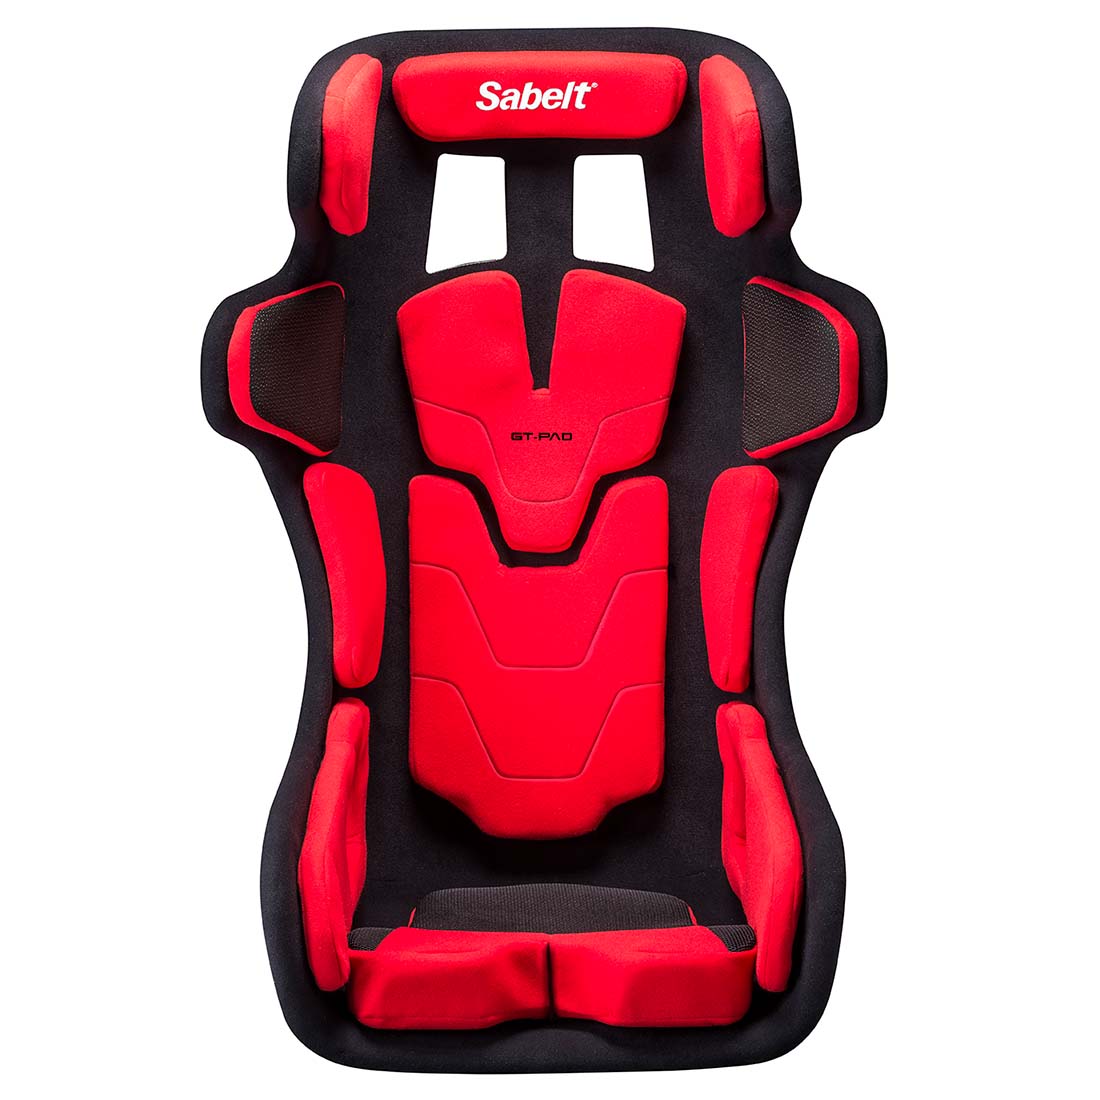 Sabelt GT-Pad FIA Racing Seat